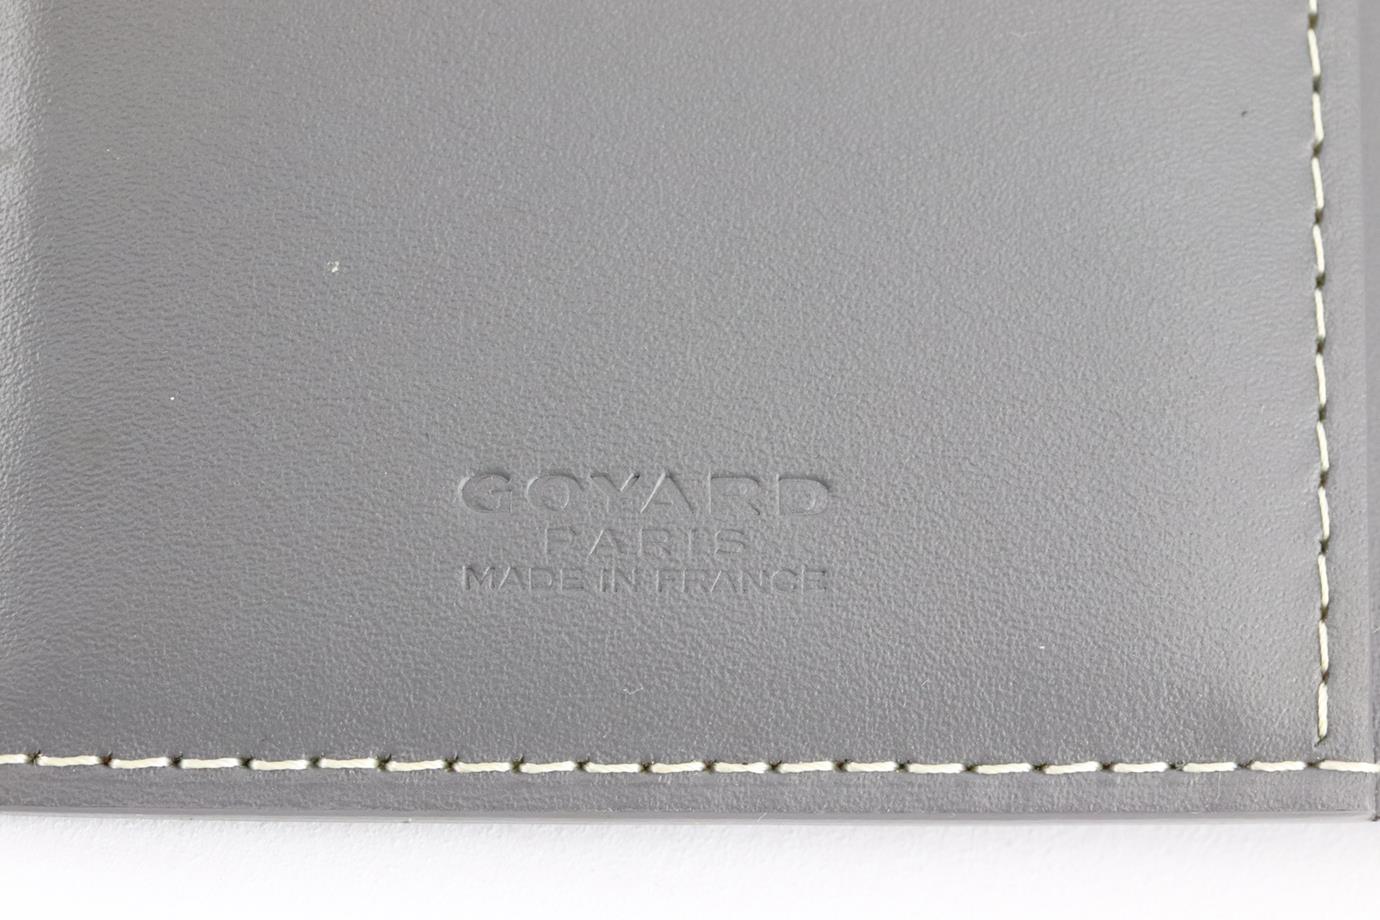 goyard, Goyard Grenelle passport cover in grey, immaculate aaron